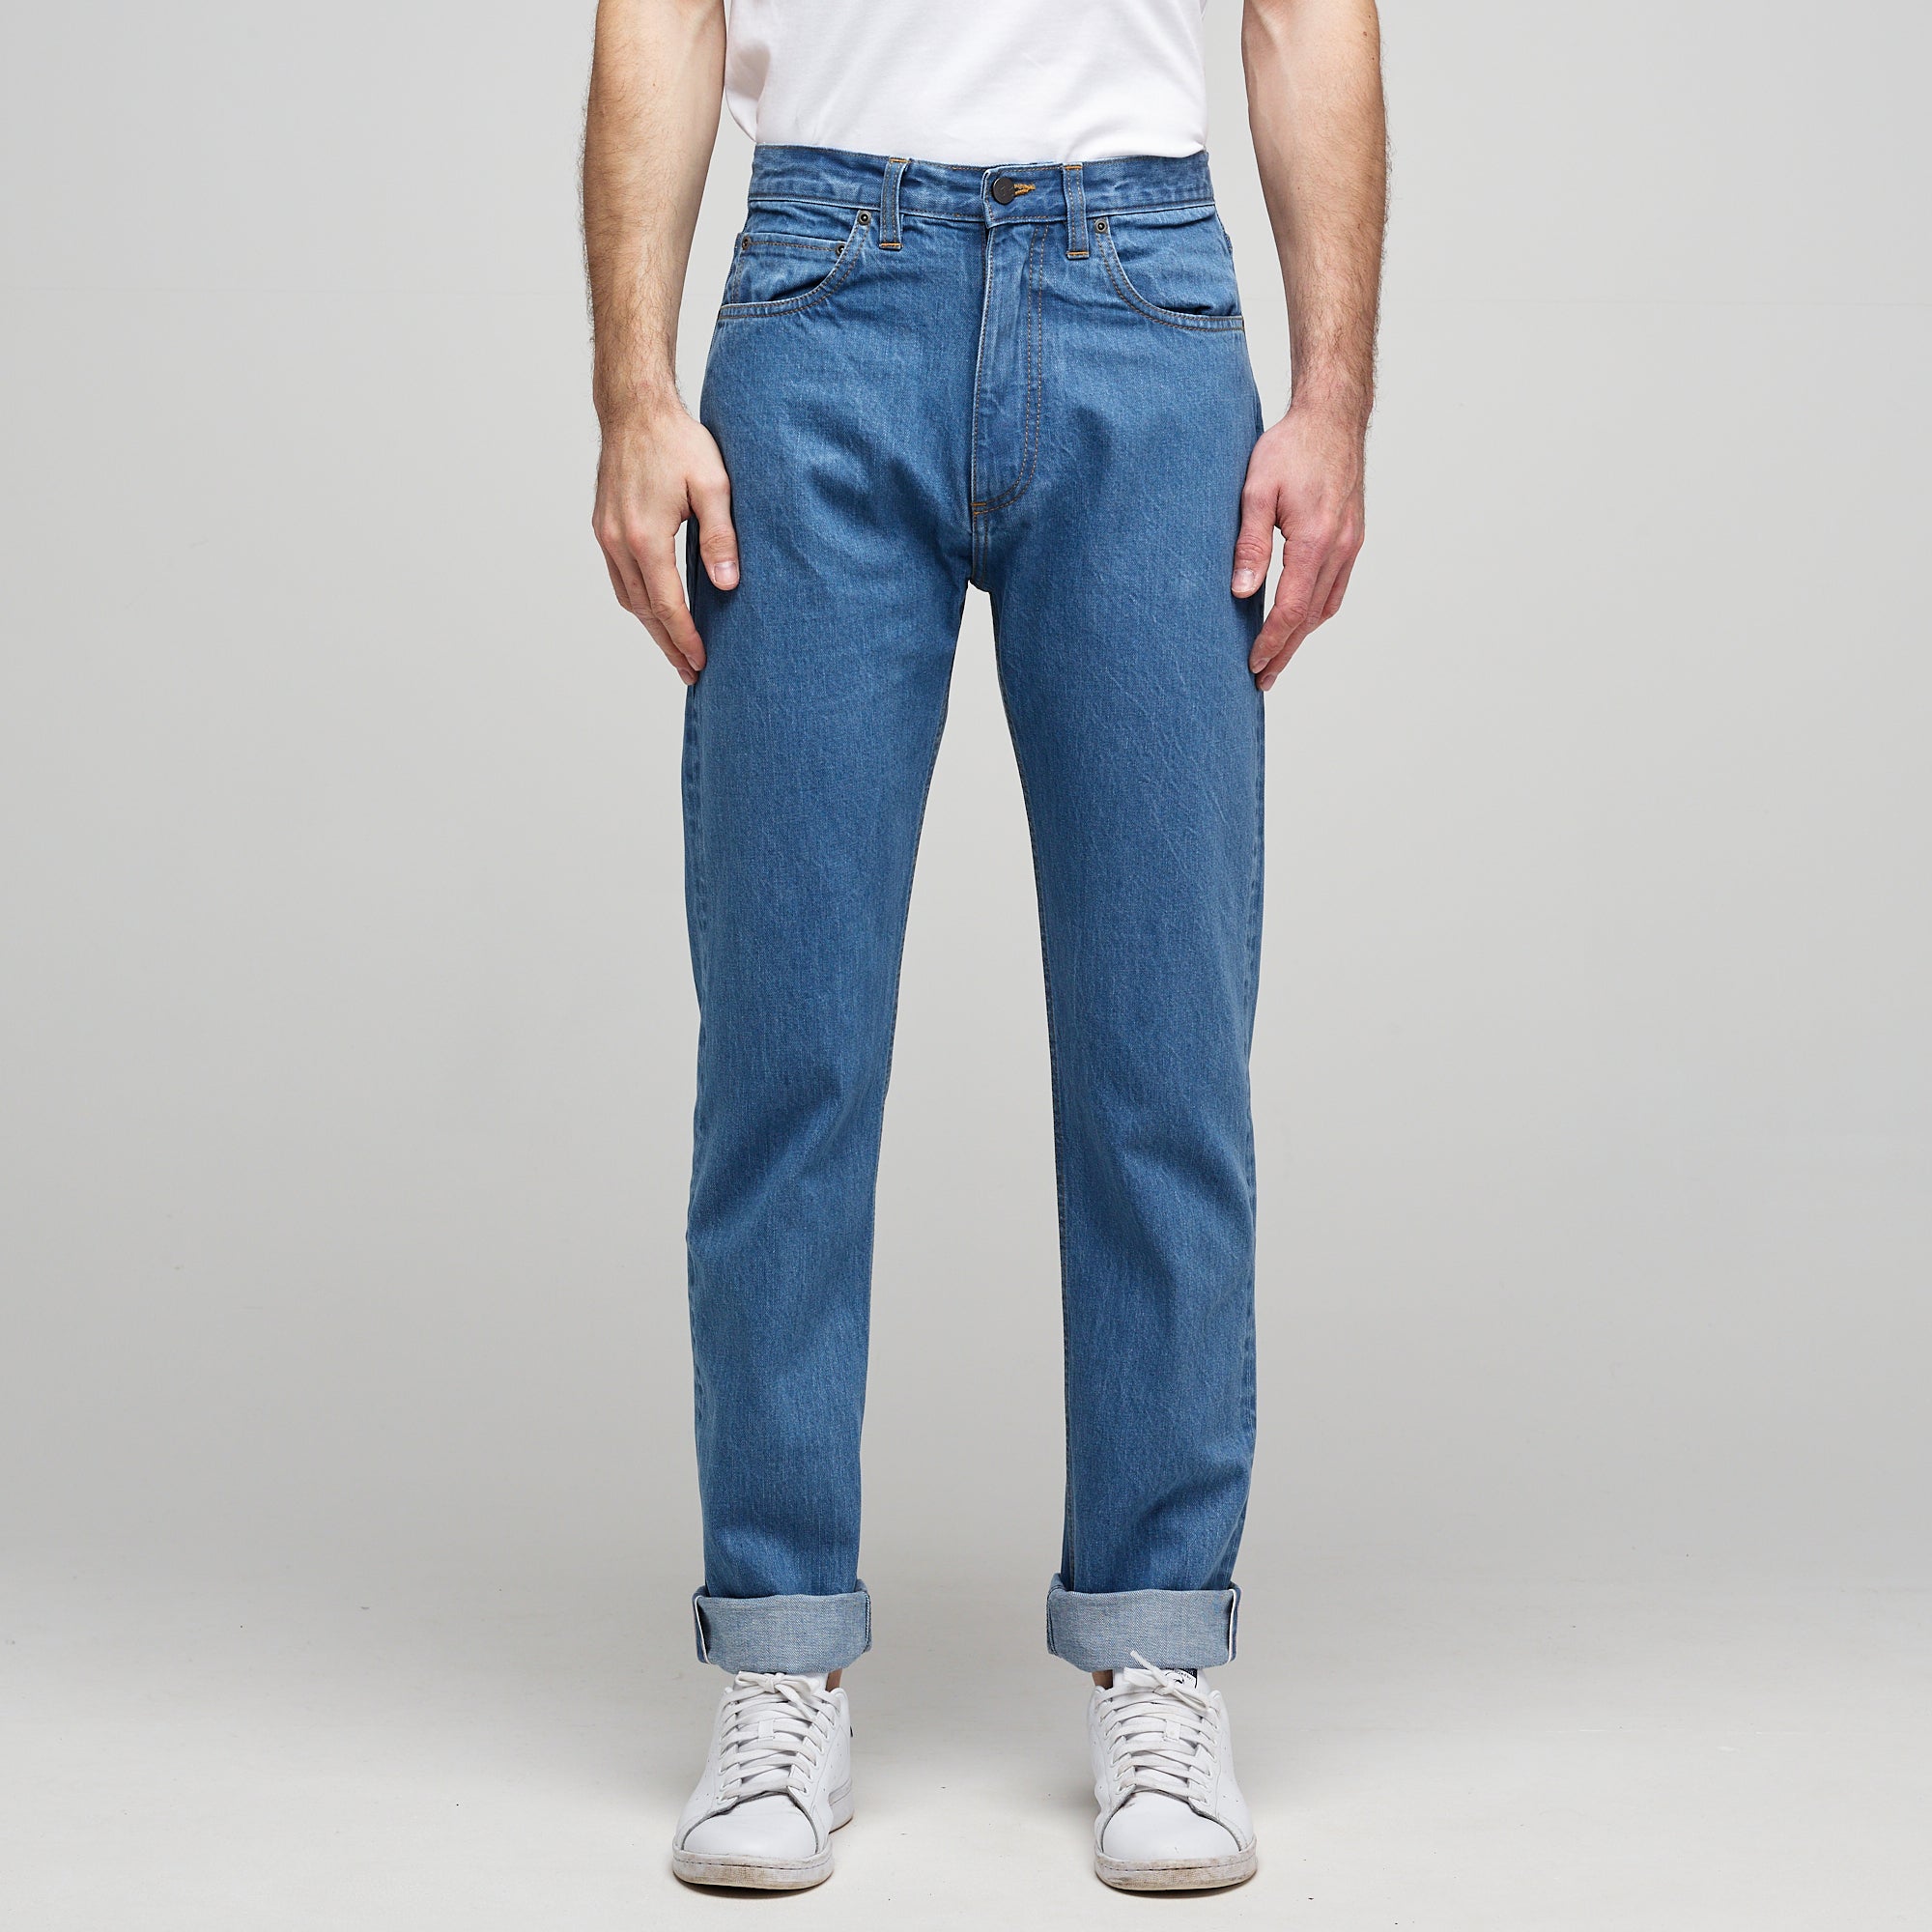 Men's Straight Cut Selvedge Jean - Fade - Community Clothing